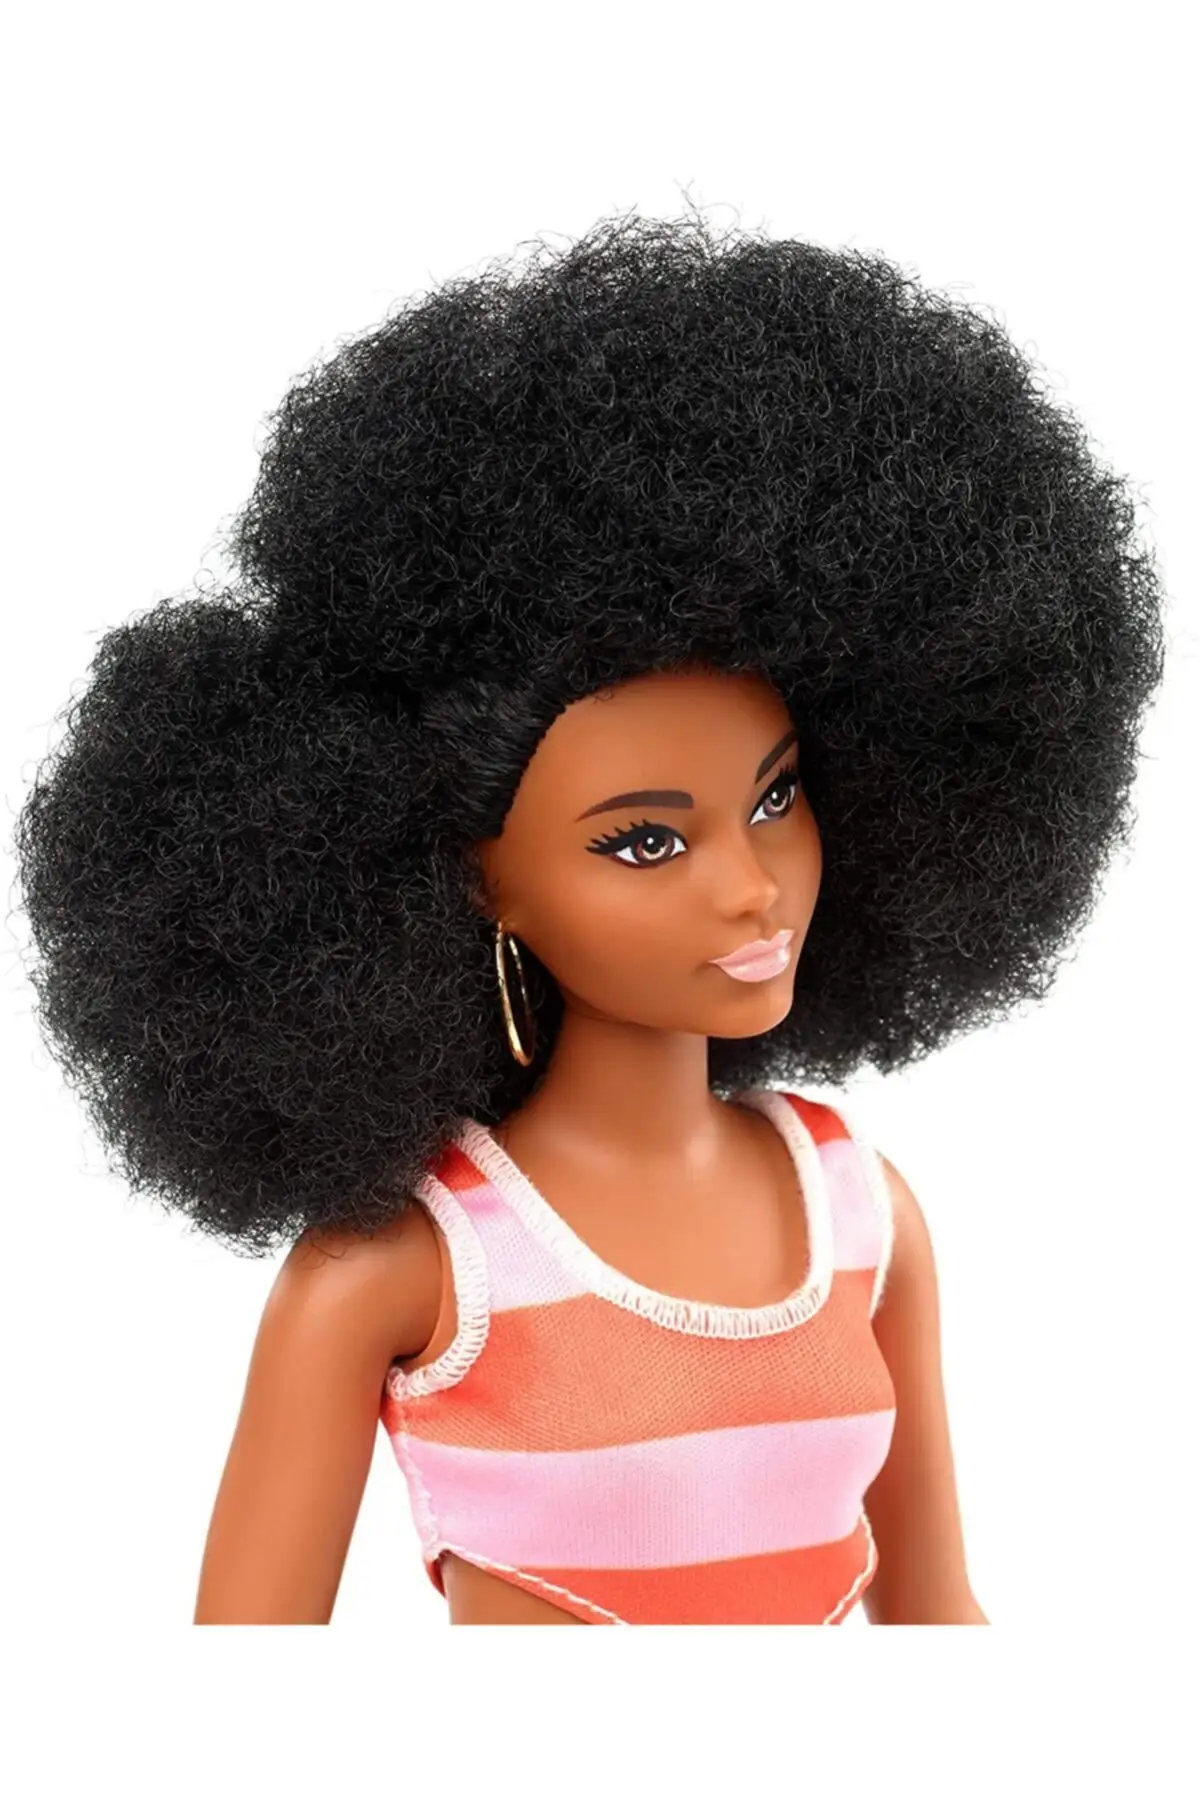 Барби фашионистас афро. Барби Fashionistas 105. Барби фашионистас чернокожая. Кукла Барби фашионистас афро.